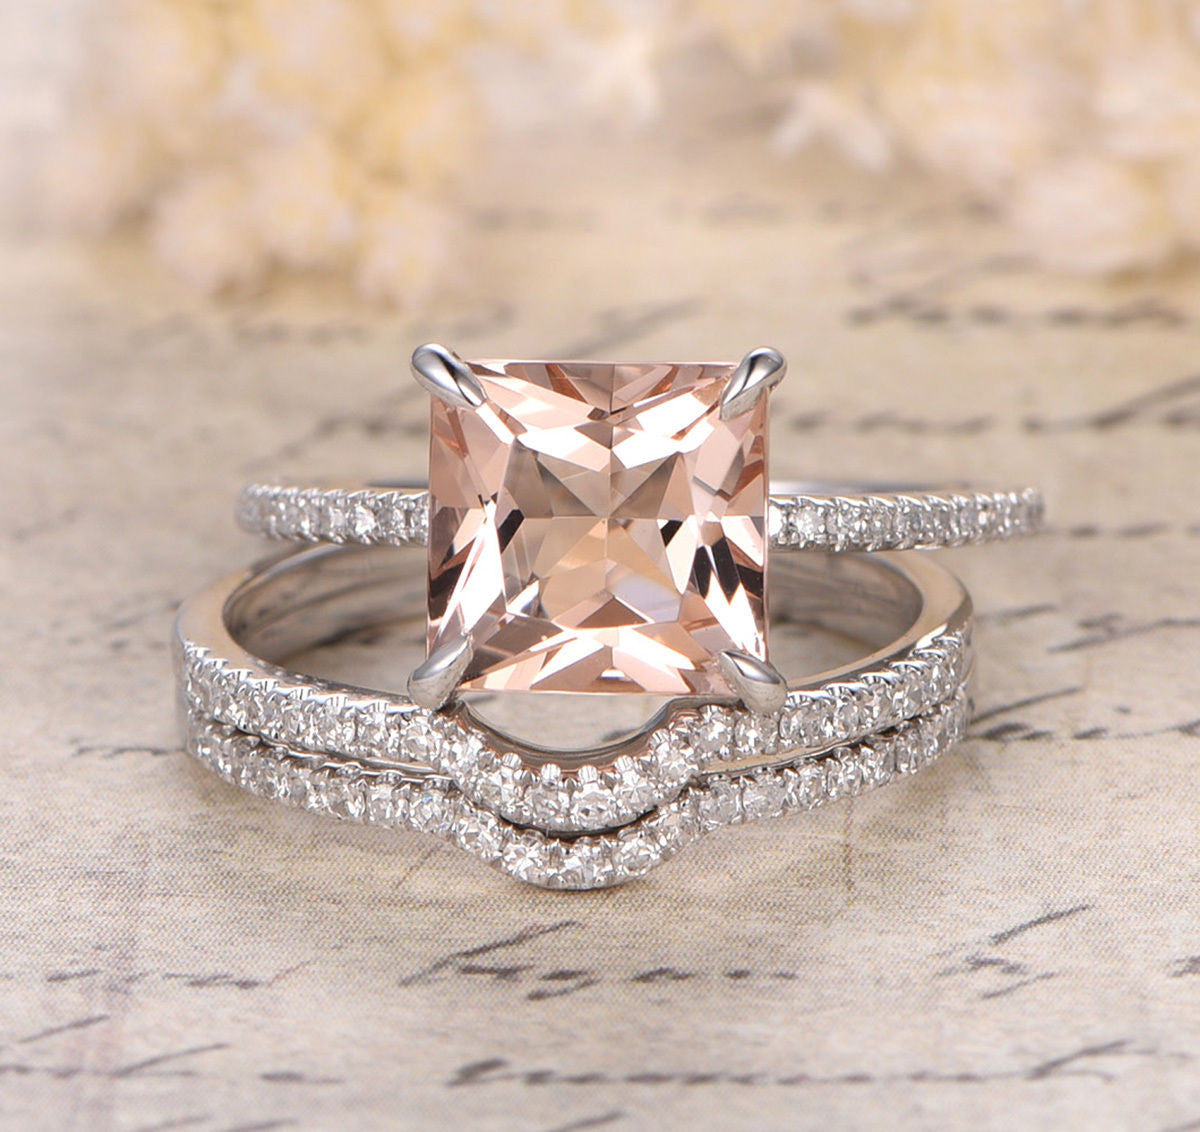 Princess Morganite Engagement Ring 3 Bridal Set Pave Diamond Wedding 14K White Gold 8mm - Lord of Gem Rings - 3